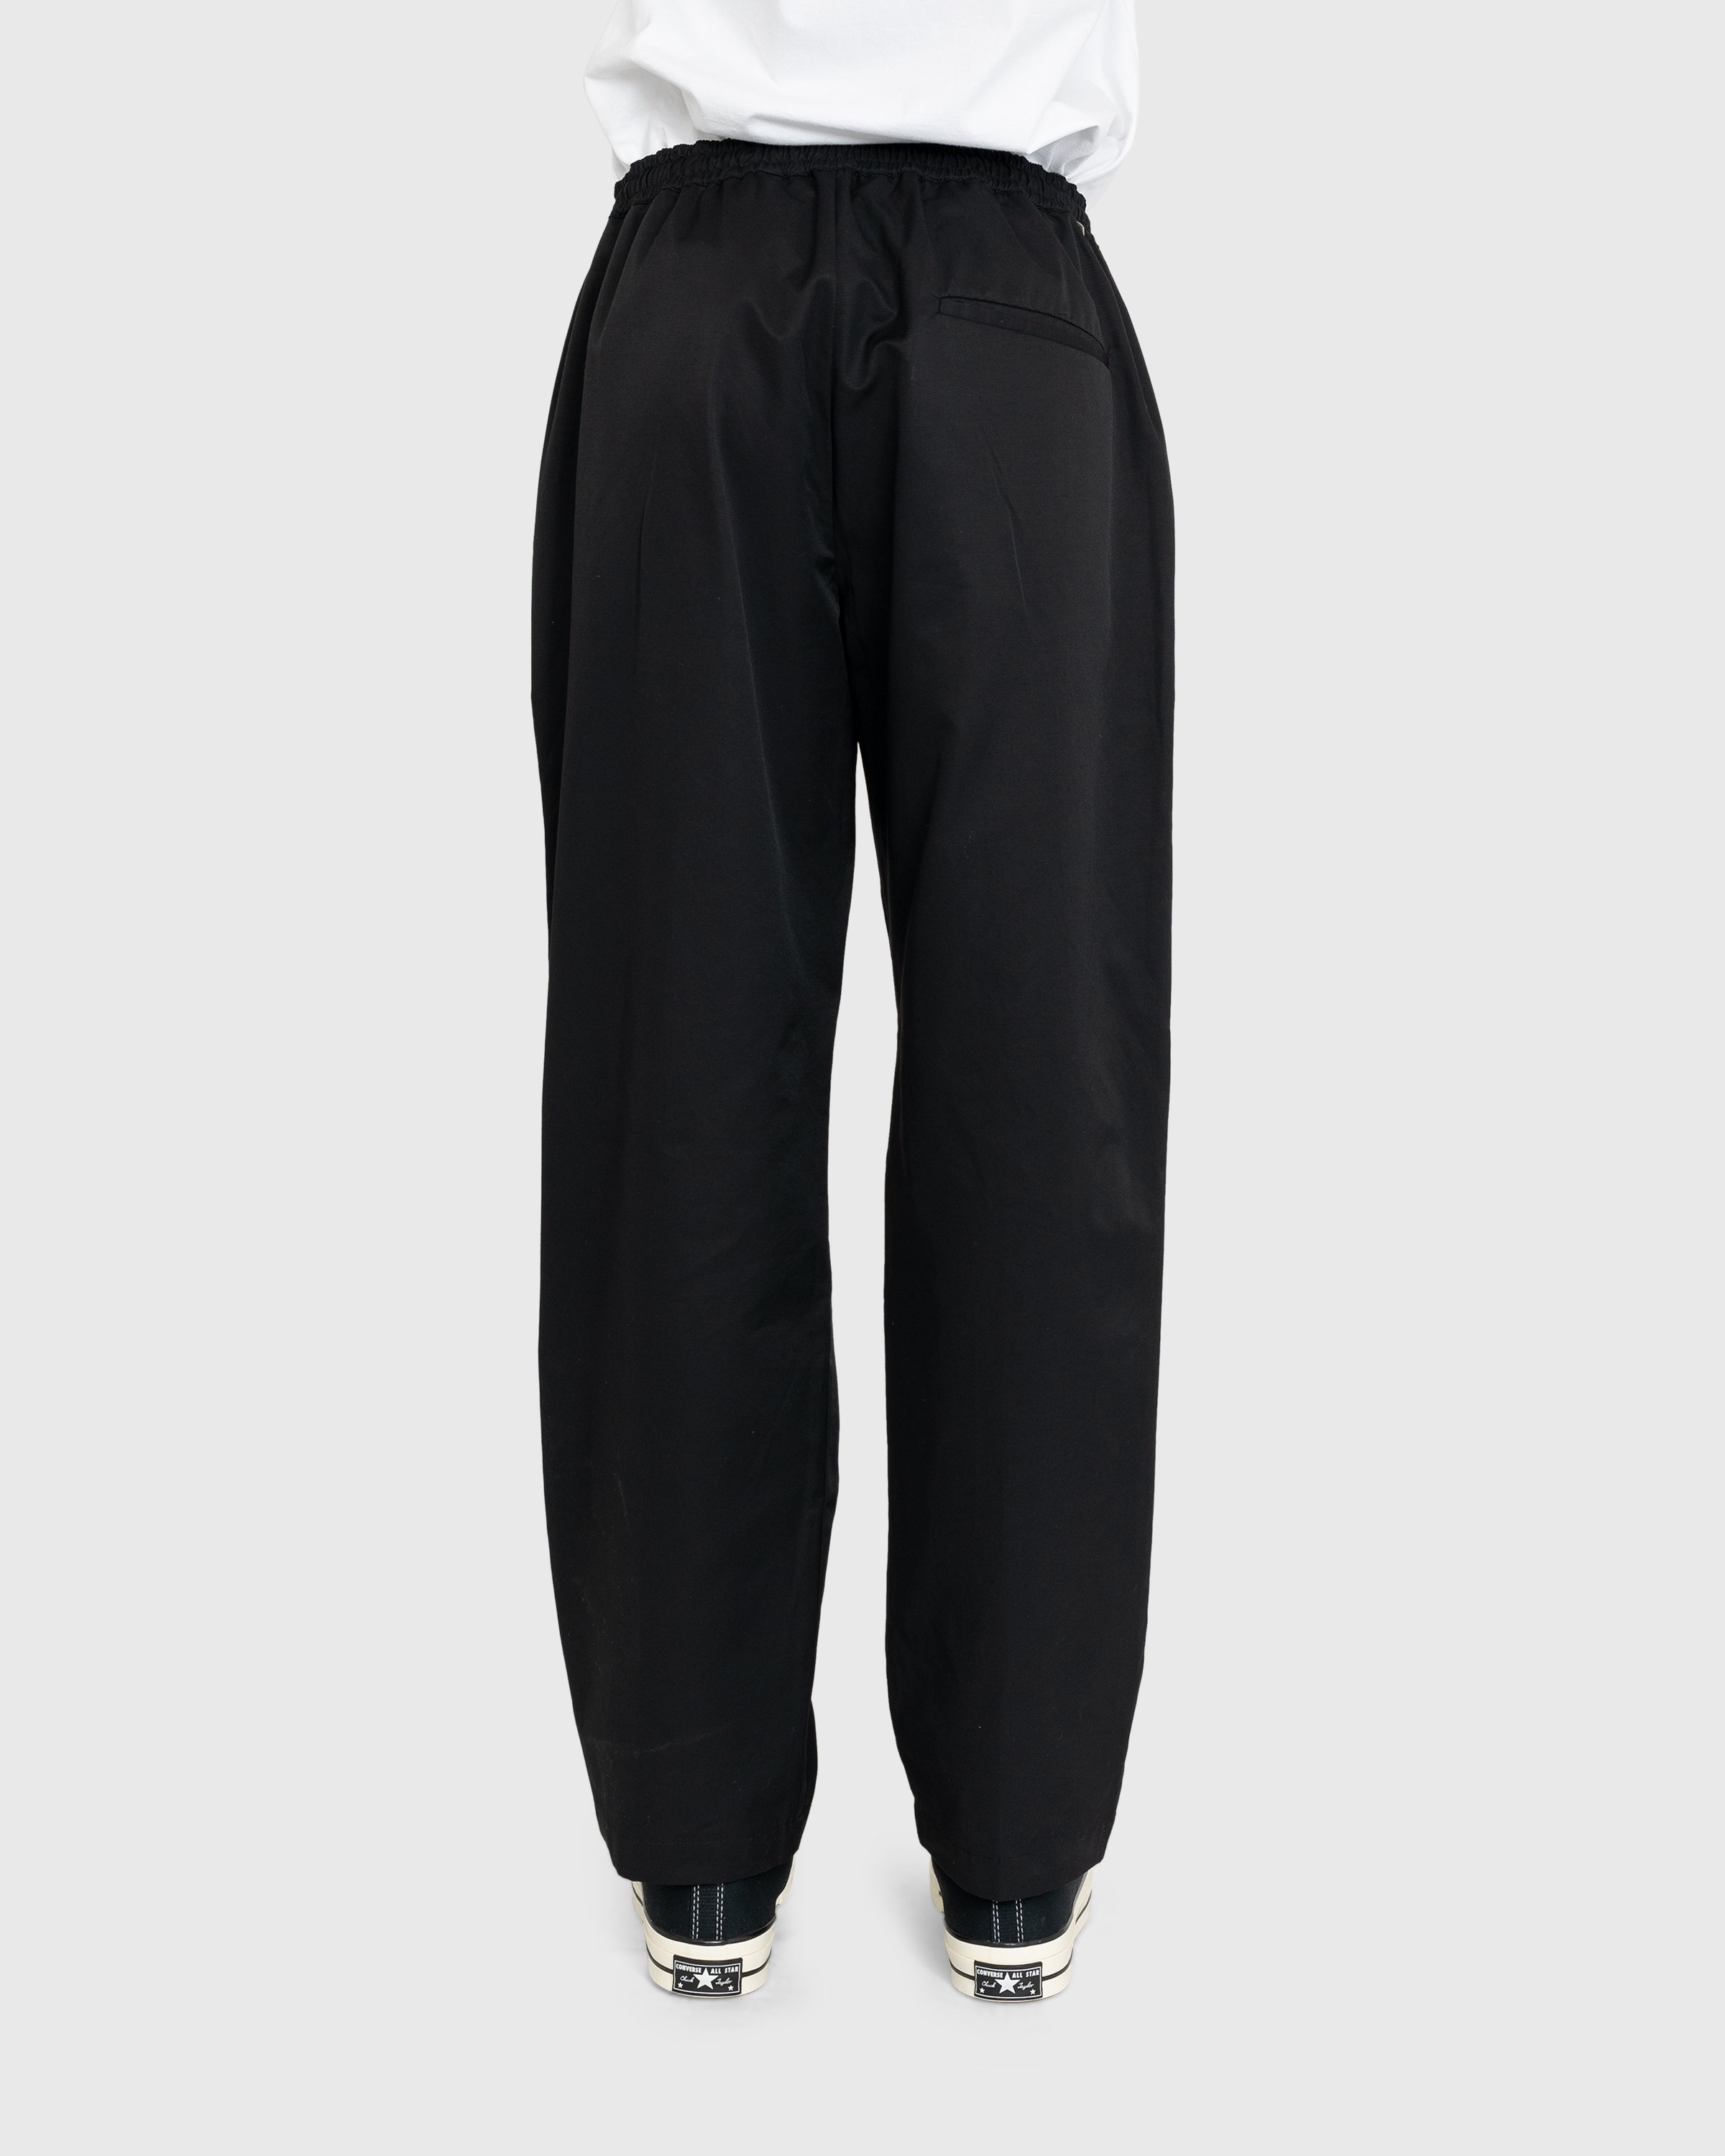 Highsnobiety – Cotton Nylon Elastic Pants Black - Trousers - Black - Image 3